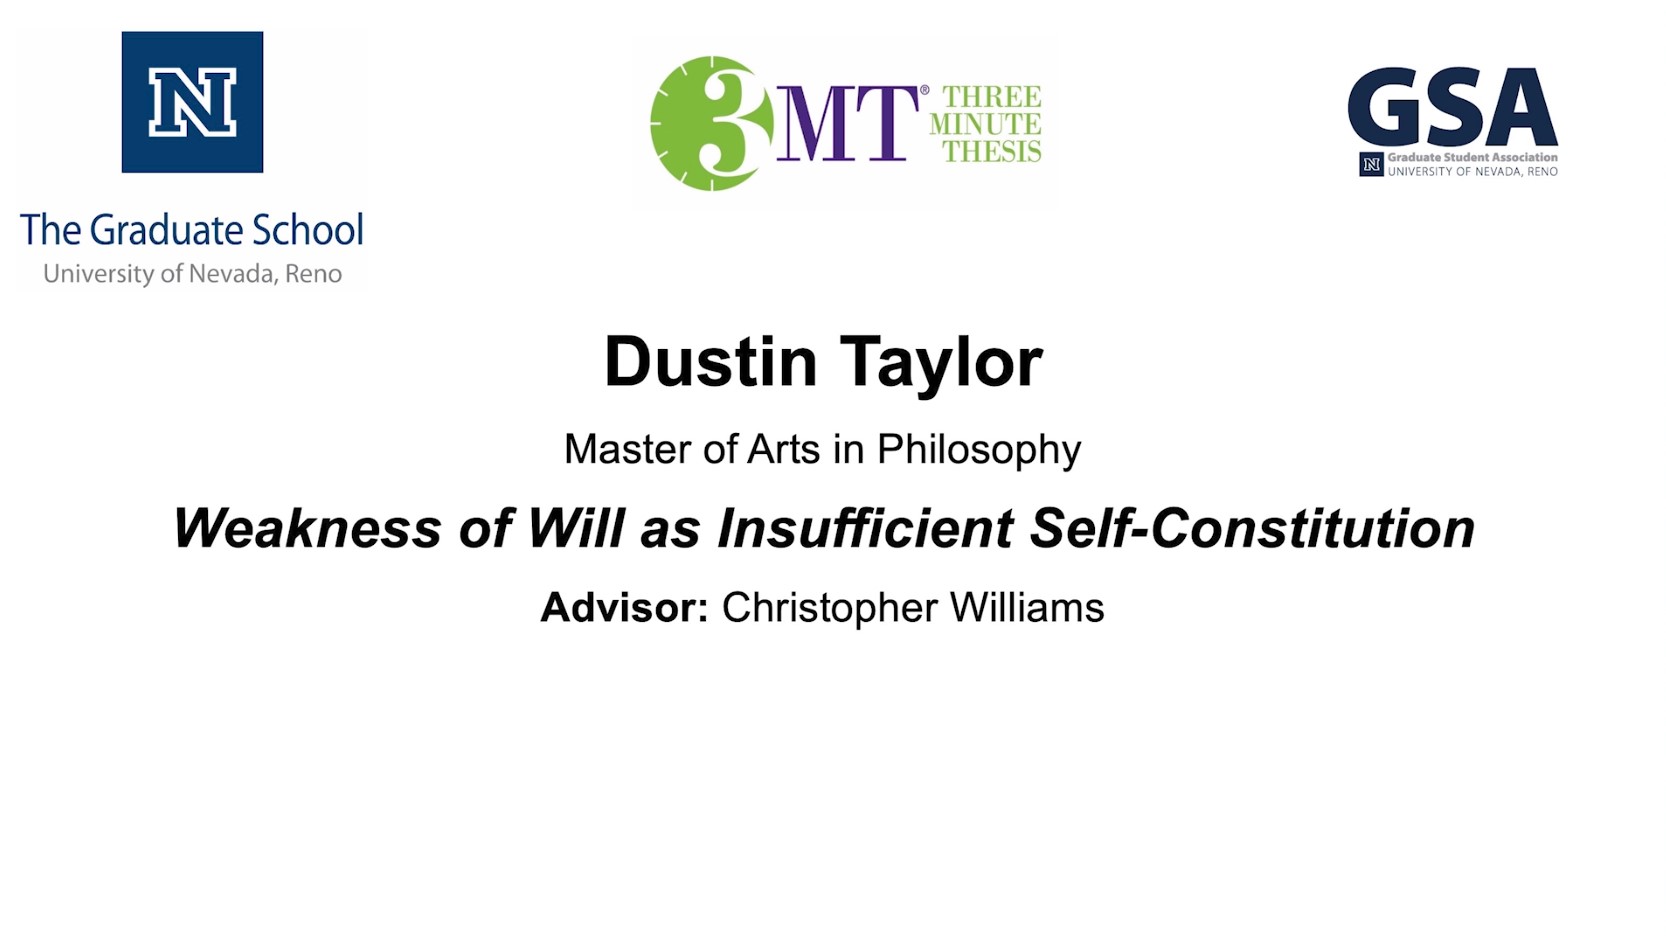 Thumbnail of Dustin Taylor's title slide